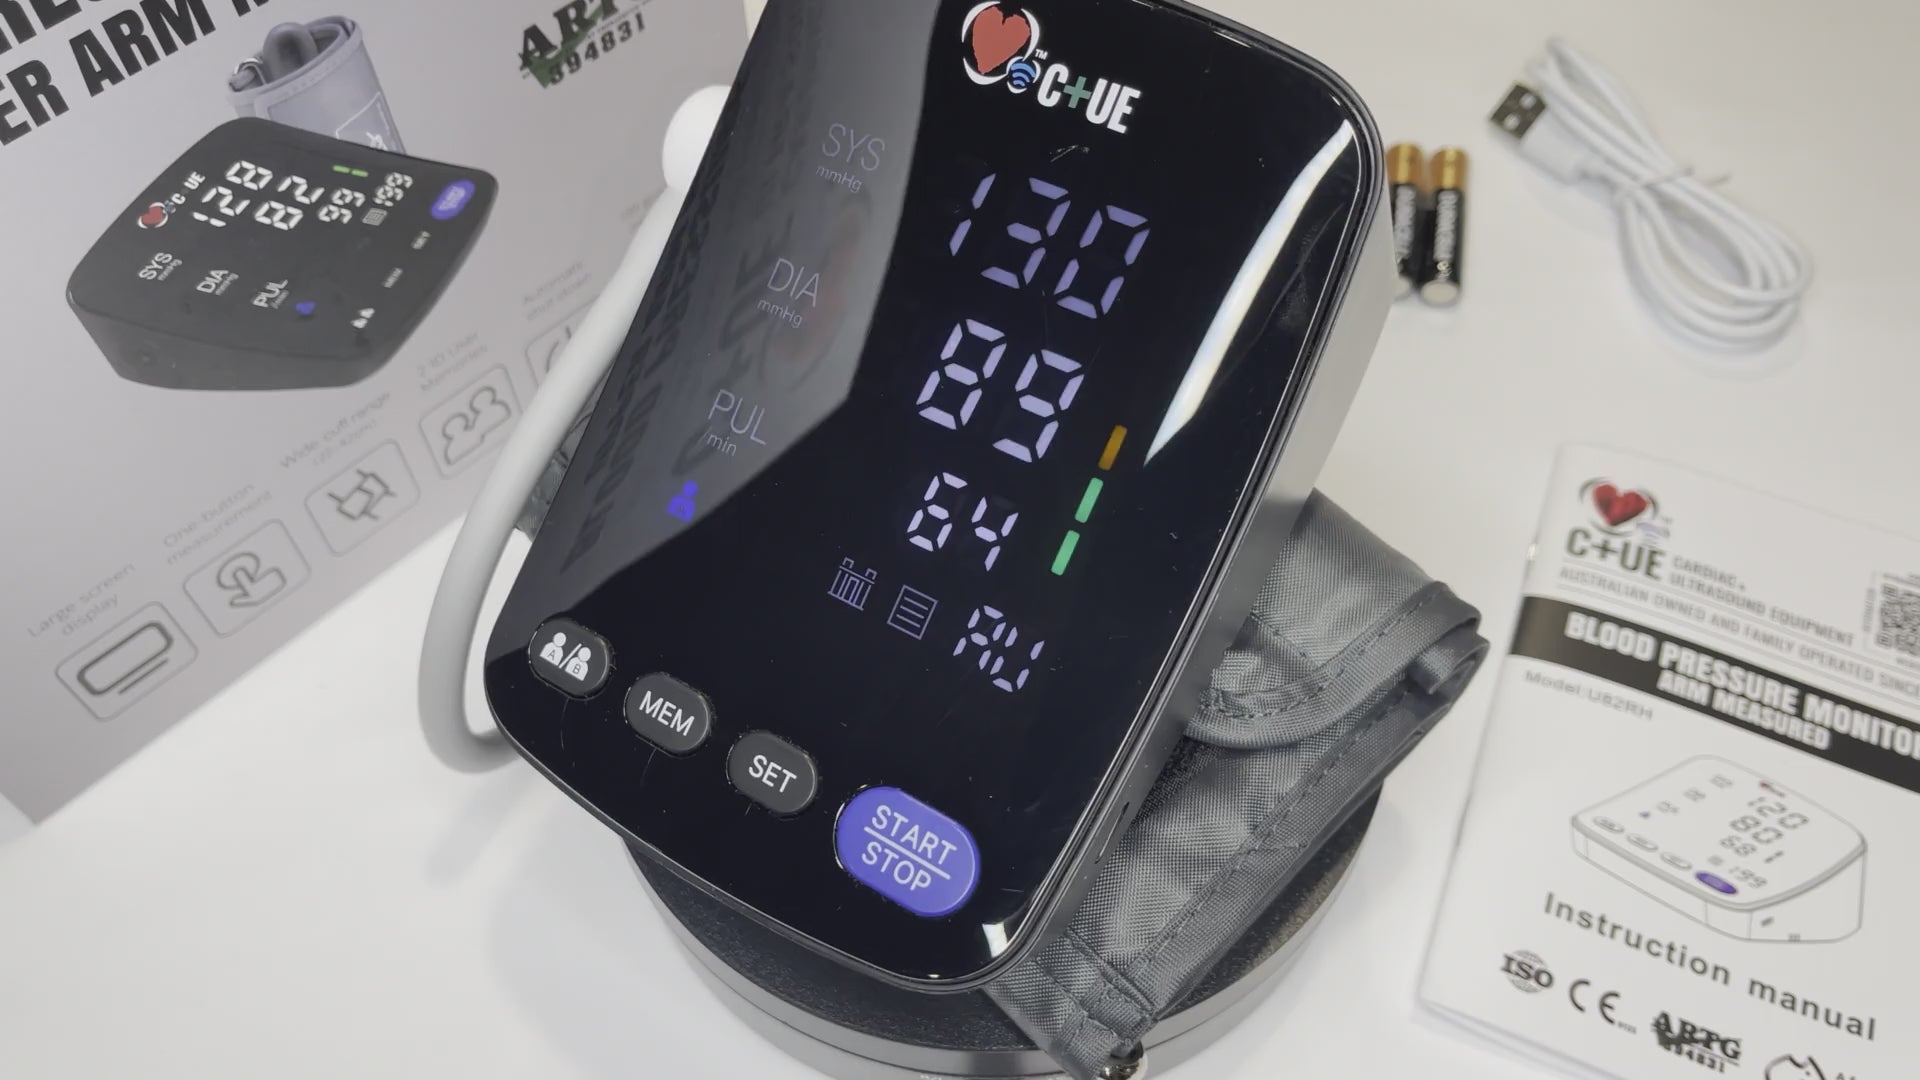 C+UE Blood Pressure Monitor, Arm measured (U82RH) -CardiacX Blood pressure monitor